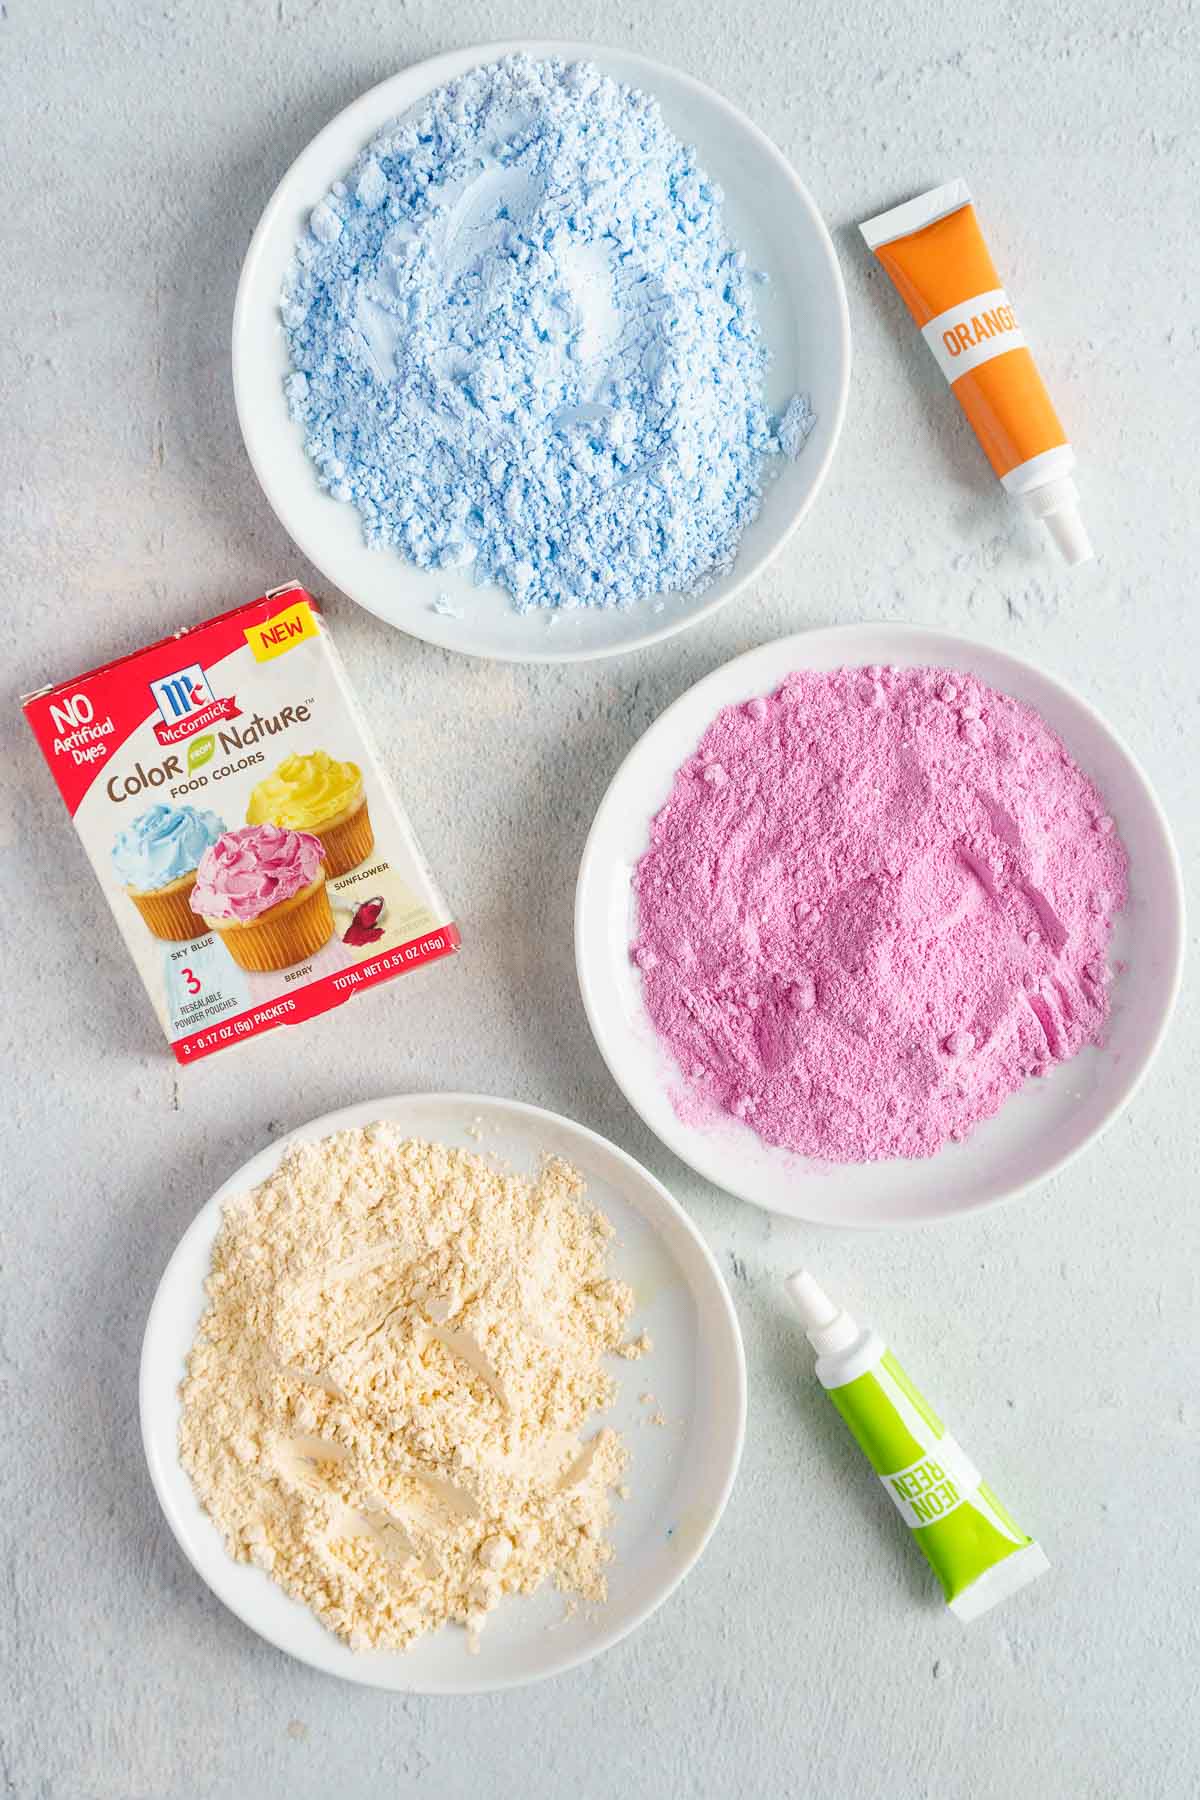 ingredients for powdered sugar plus blue powdered sugar and yellow powdered sugar on plates.